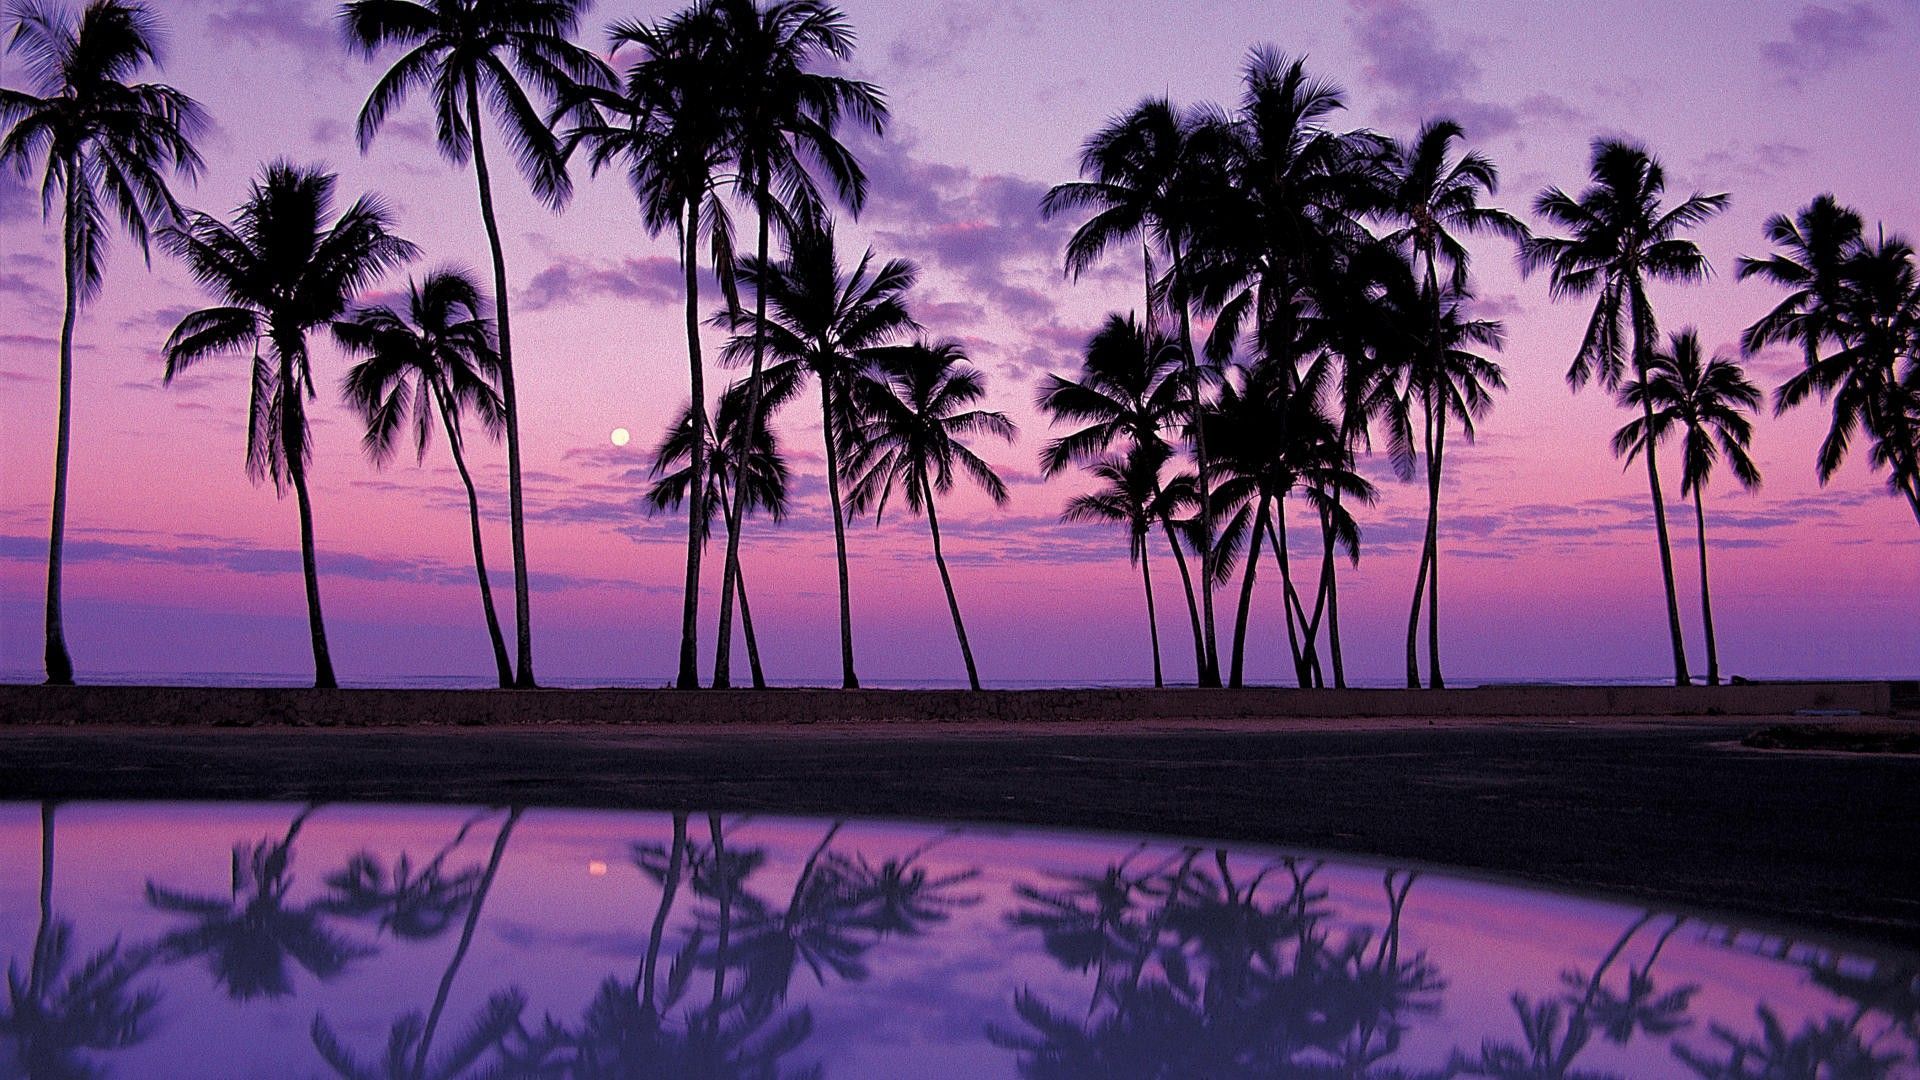 Palm Tree Background. Wallpaper, Background, Image, Art Photo. Beach sunset wallpaper, Sunset wallpaper, Beach wallpaper